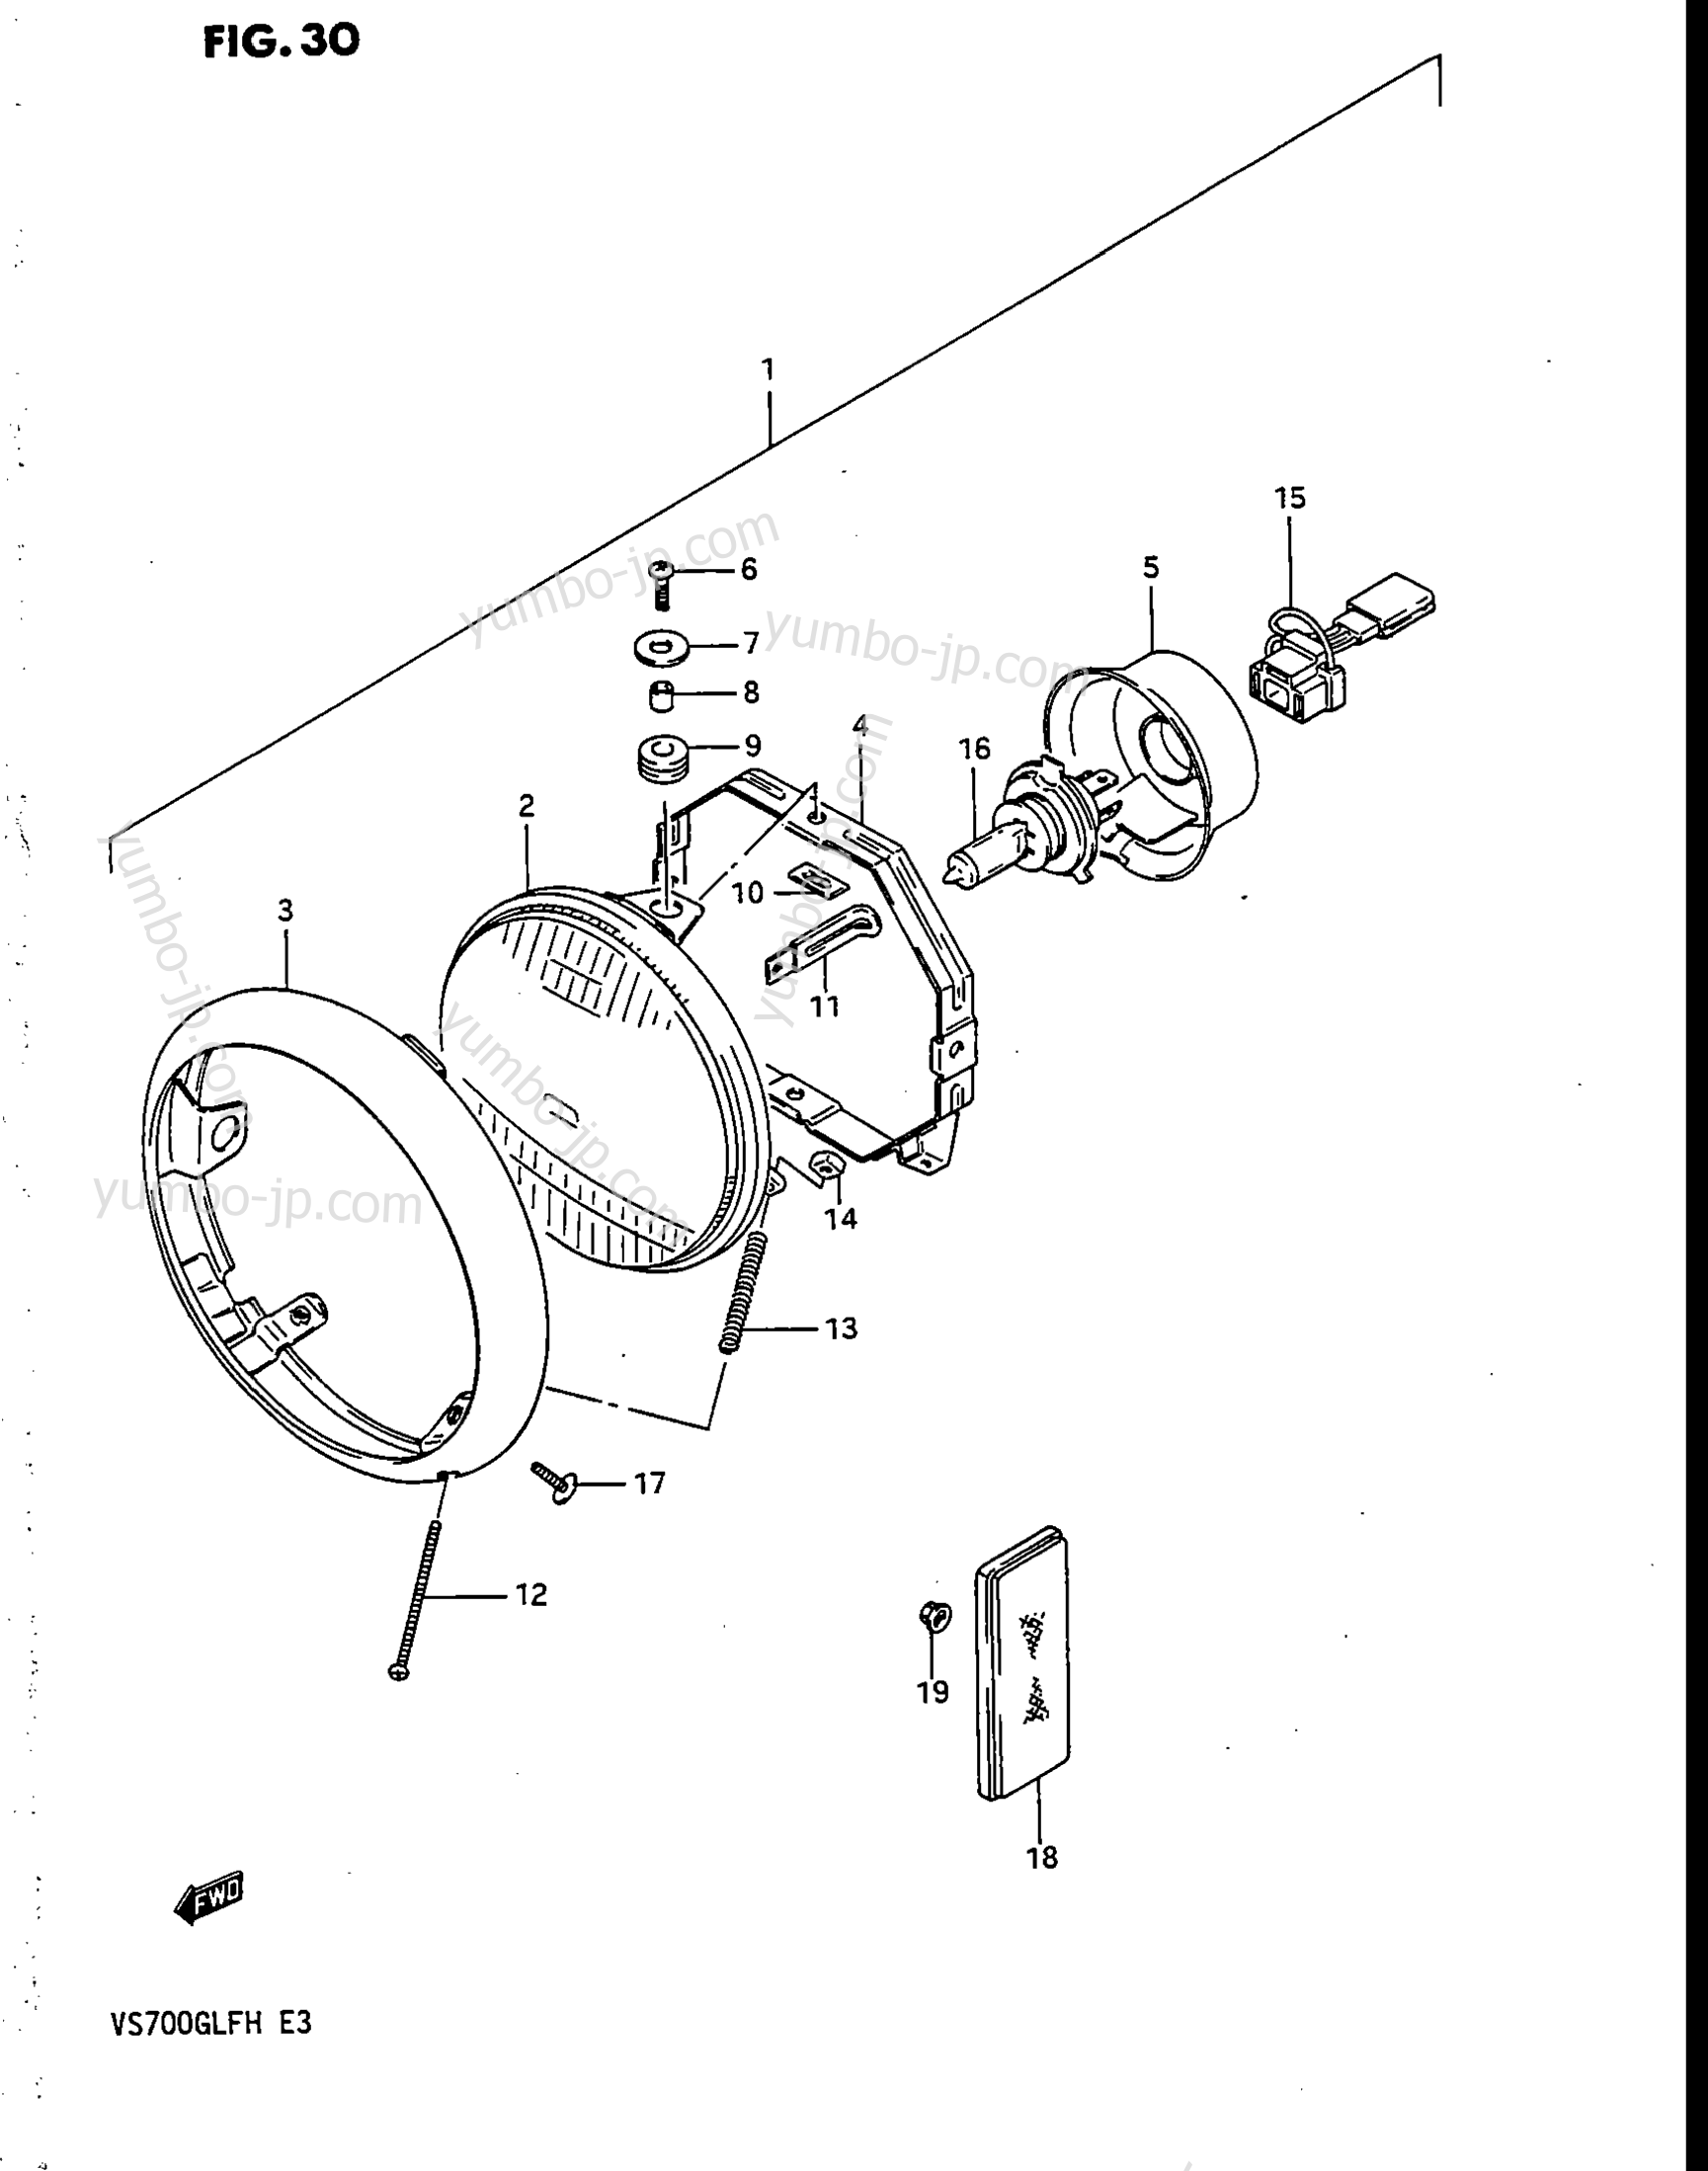 HEADLAMP for motorcycles SUZUKI Intruder (VS700GLP) 1986 year